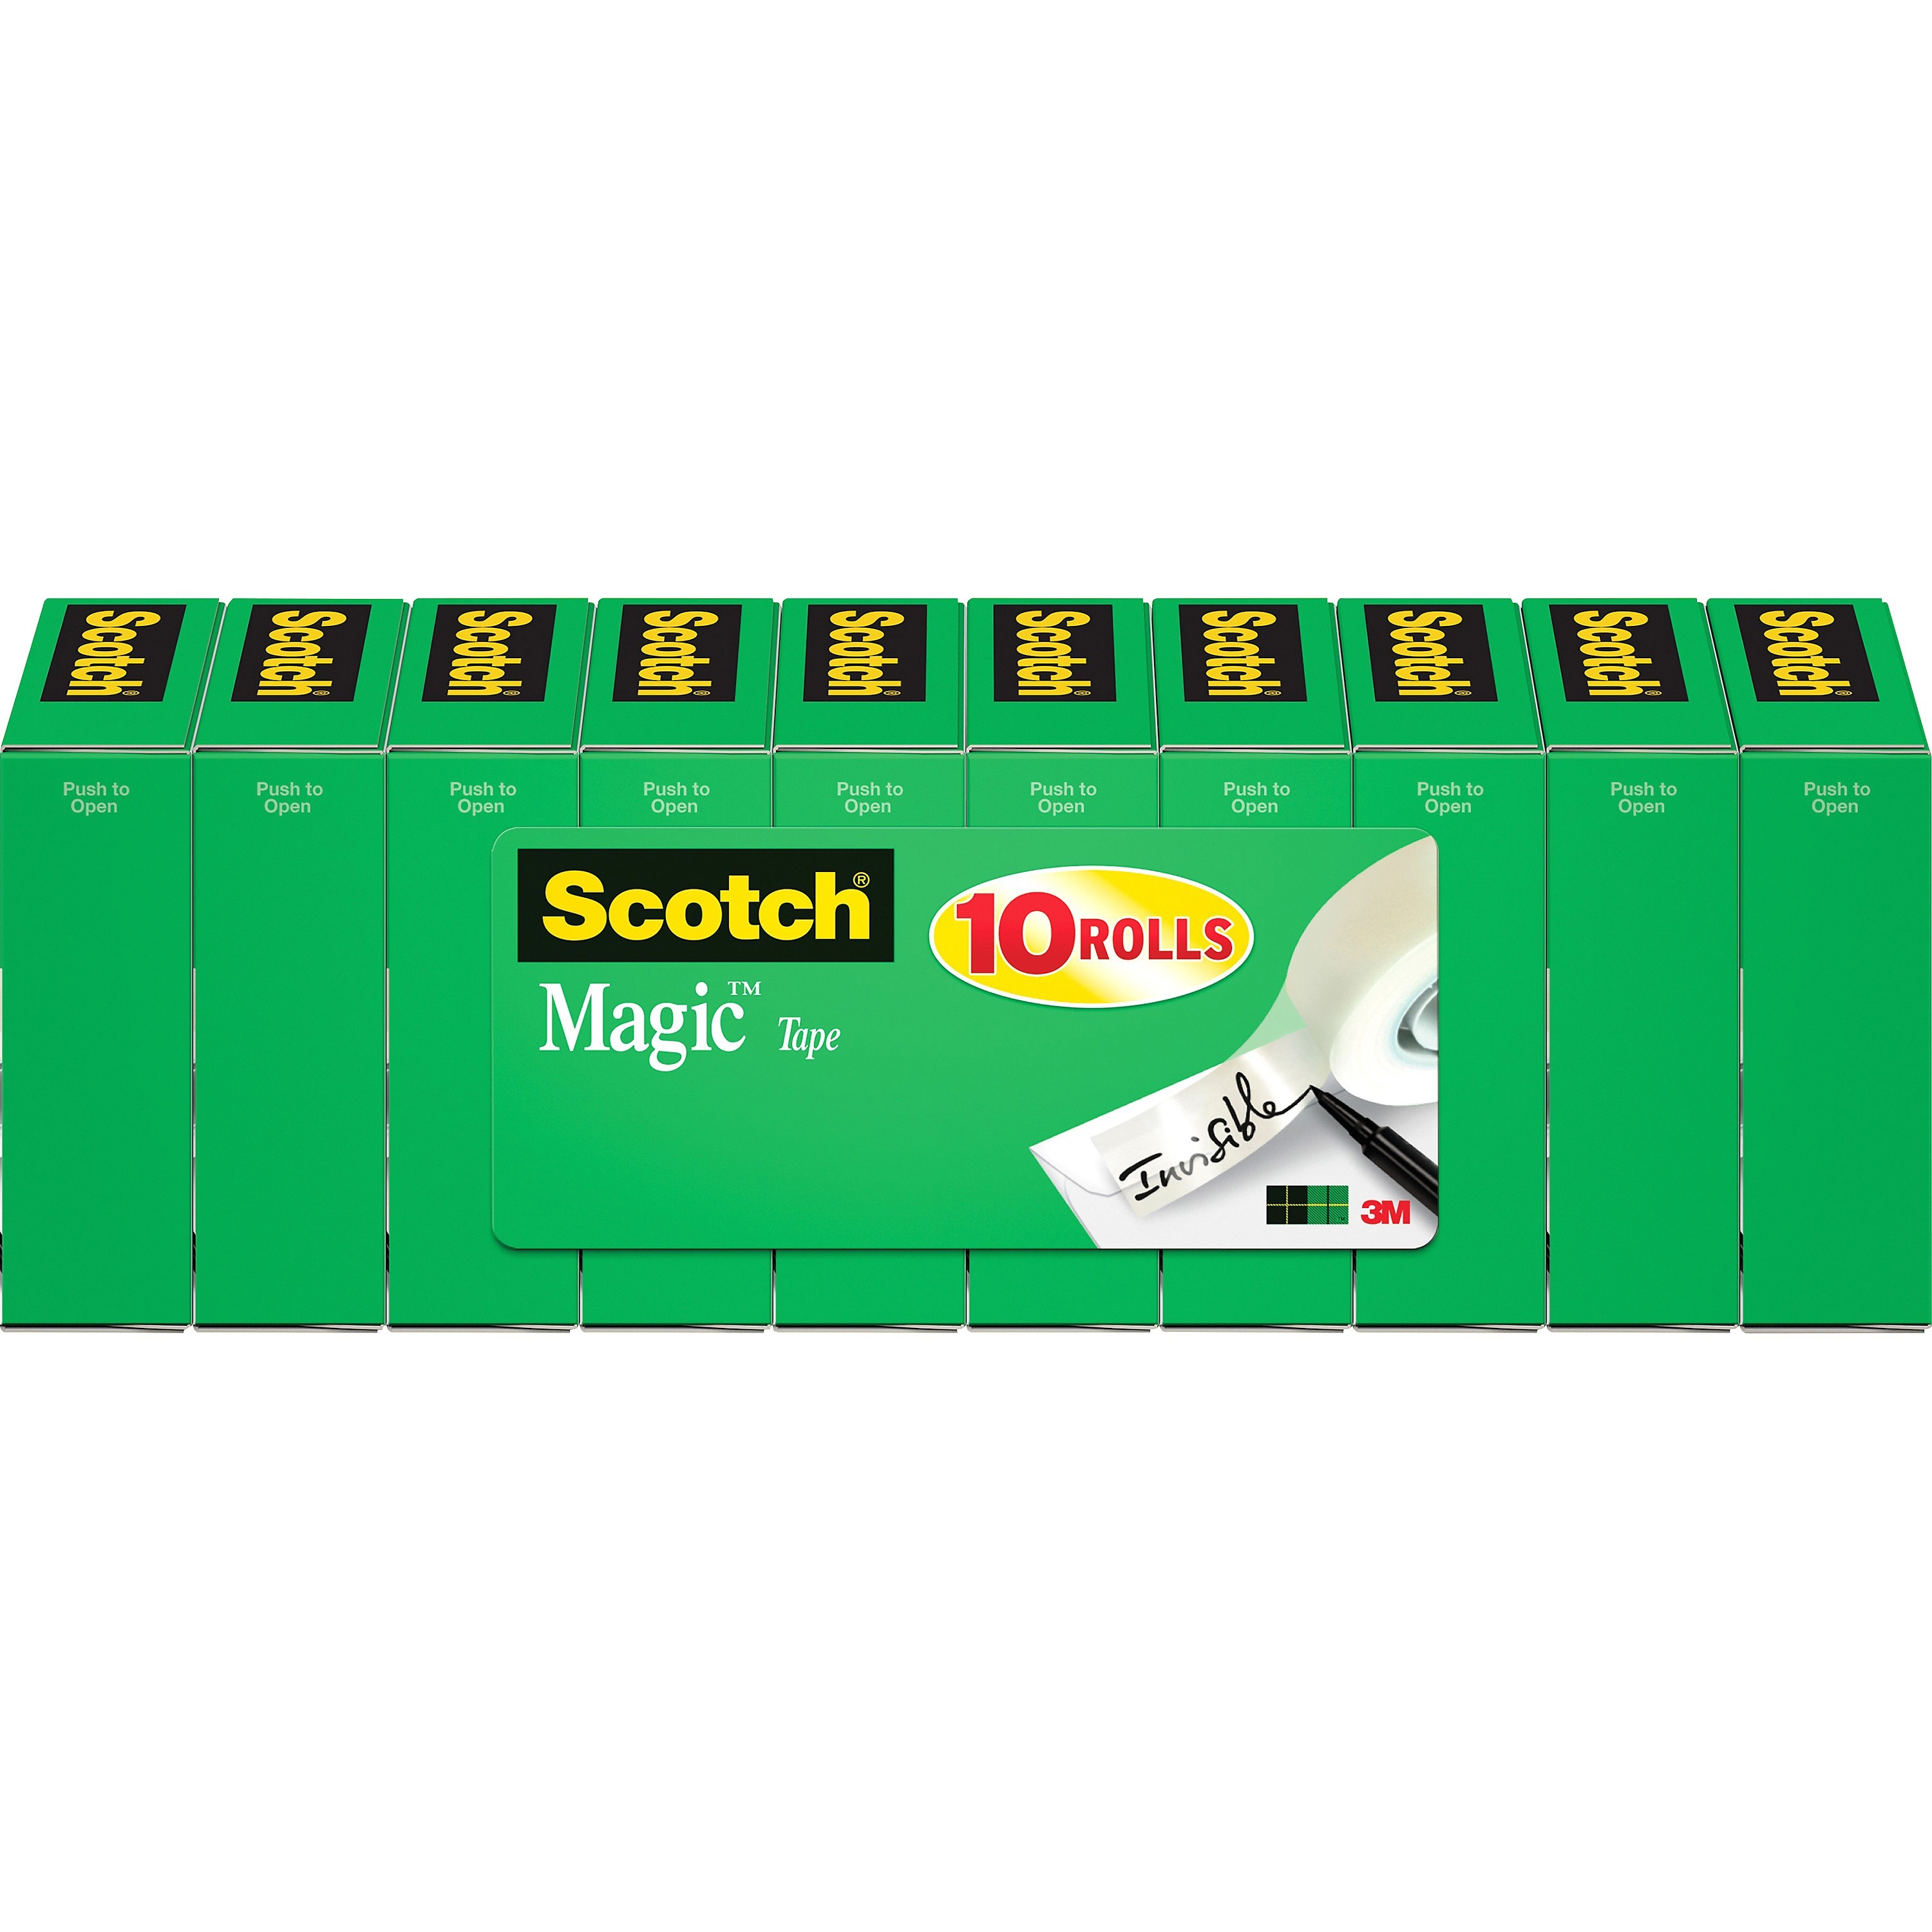 Scotch Transparent Glossy Tape, 3/4 x 1296-Inches, 1 Inch Core